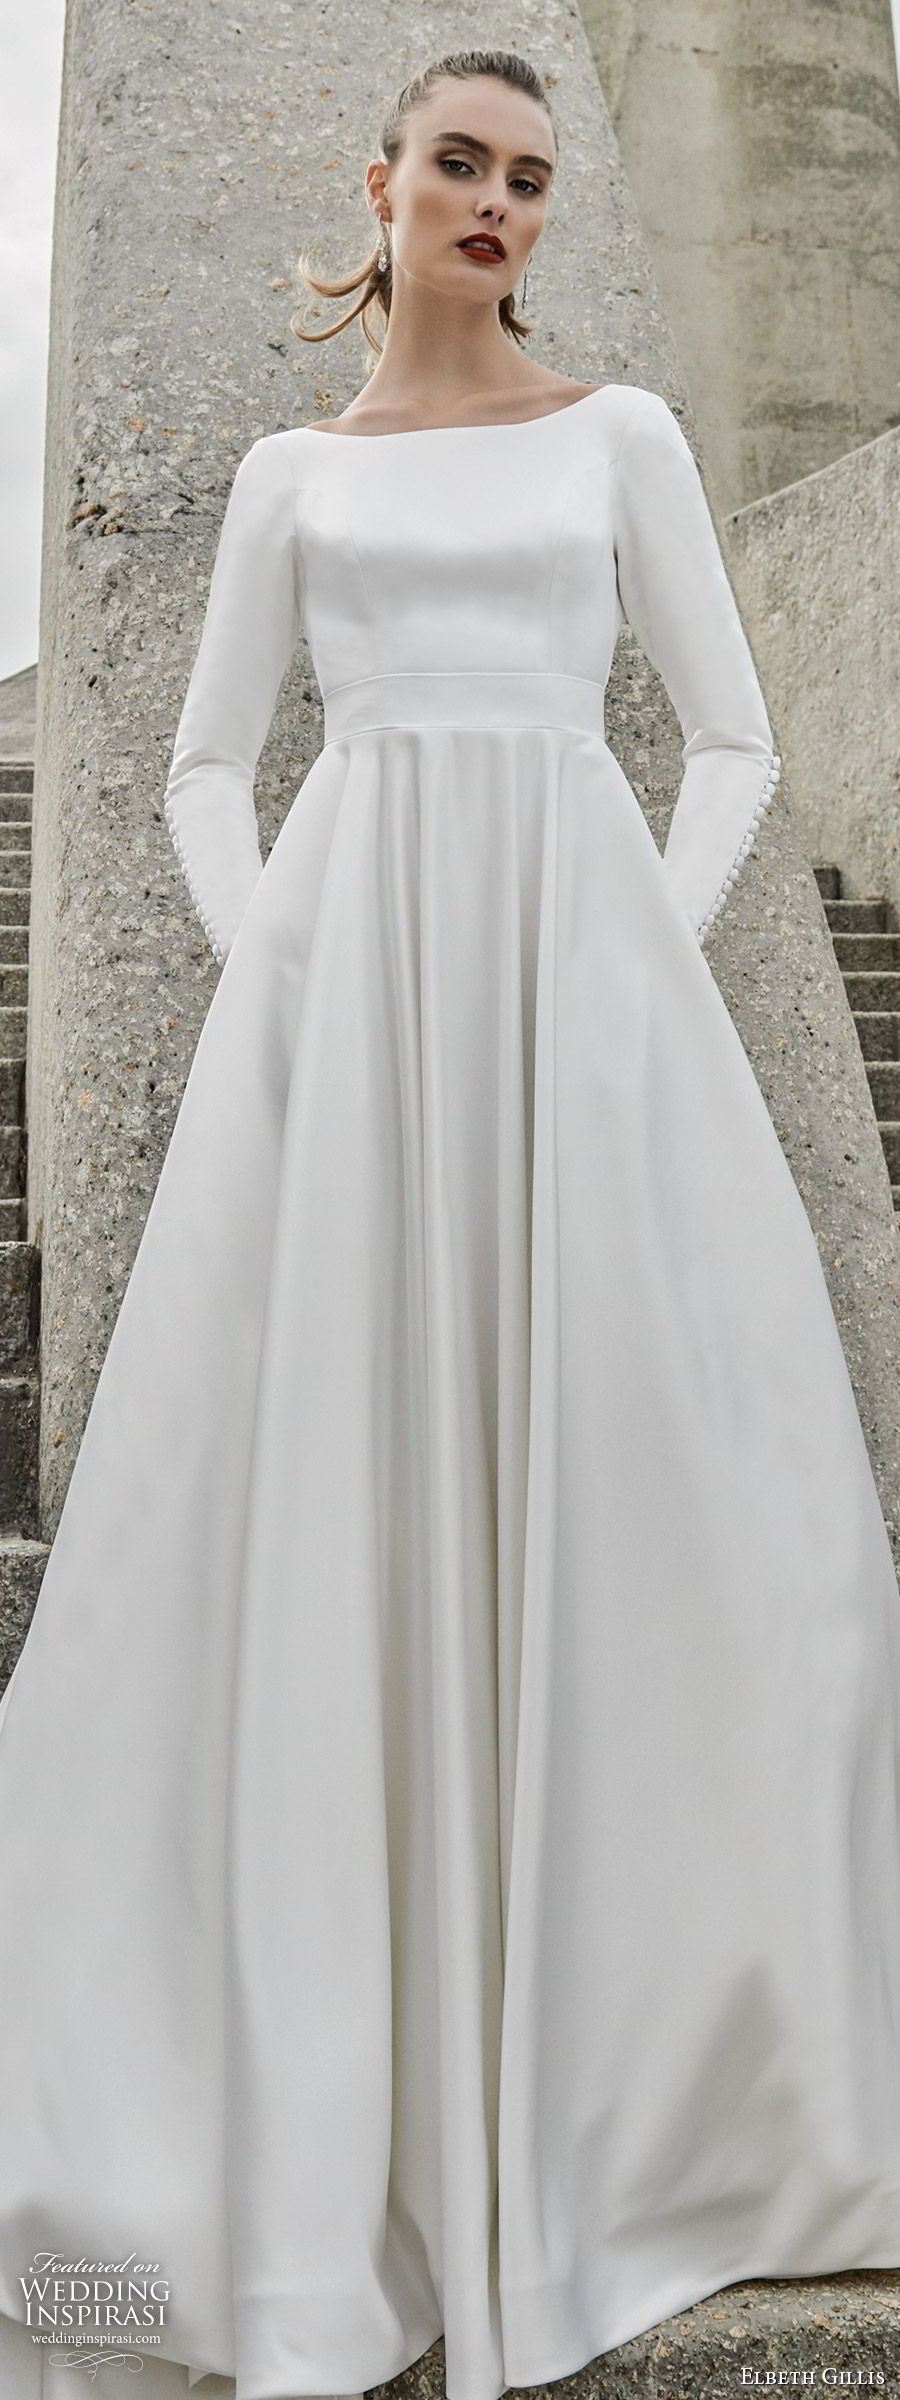 elbeth gillis 2020 bridal long sleeves bataeu neckline minimally embellished a line ball gown wedding dress (9) clean minimal chic princess modern cathedral train mv 